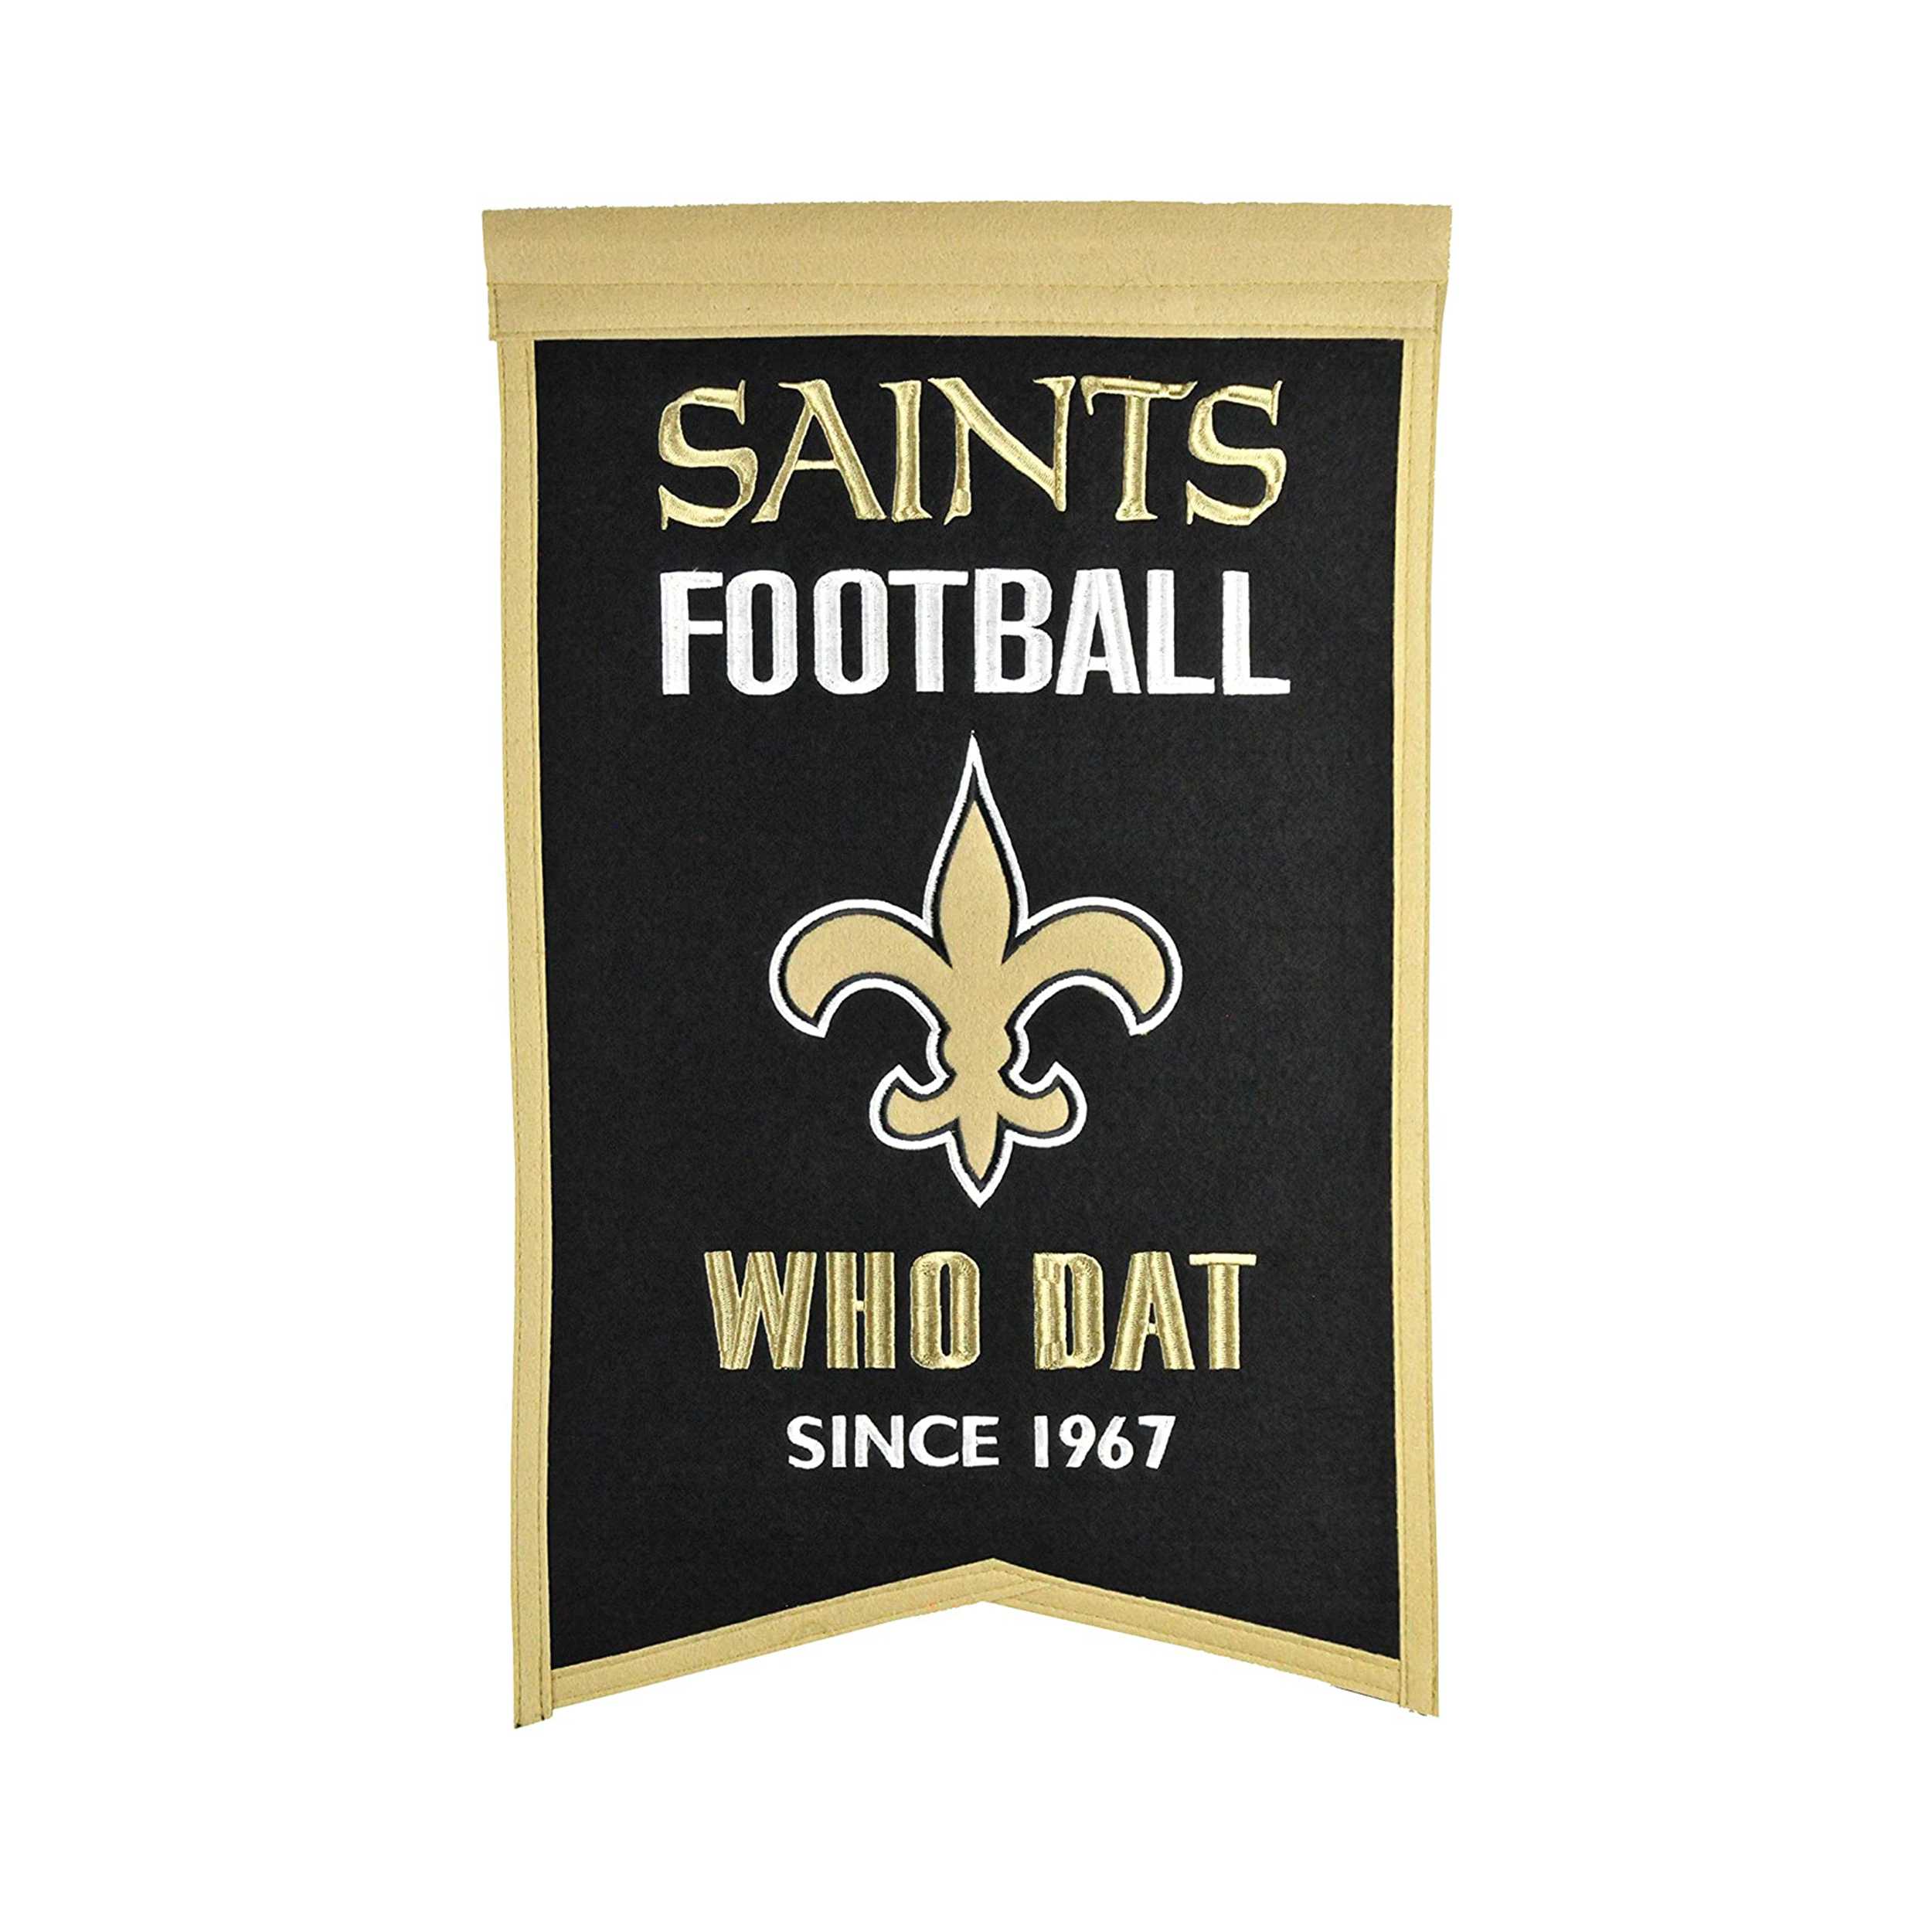 New Orleans Saints Franchise Banner